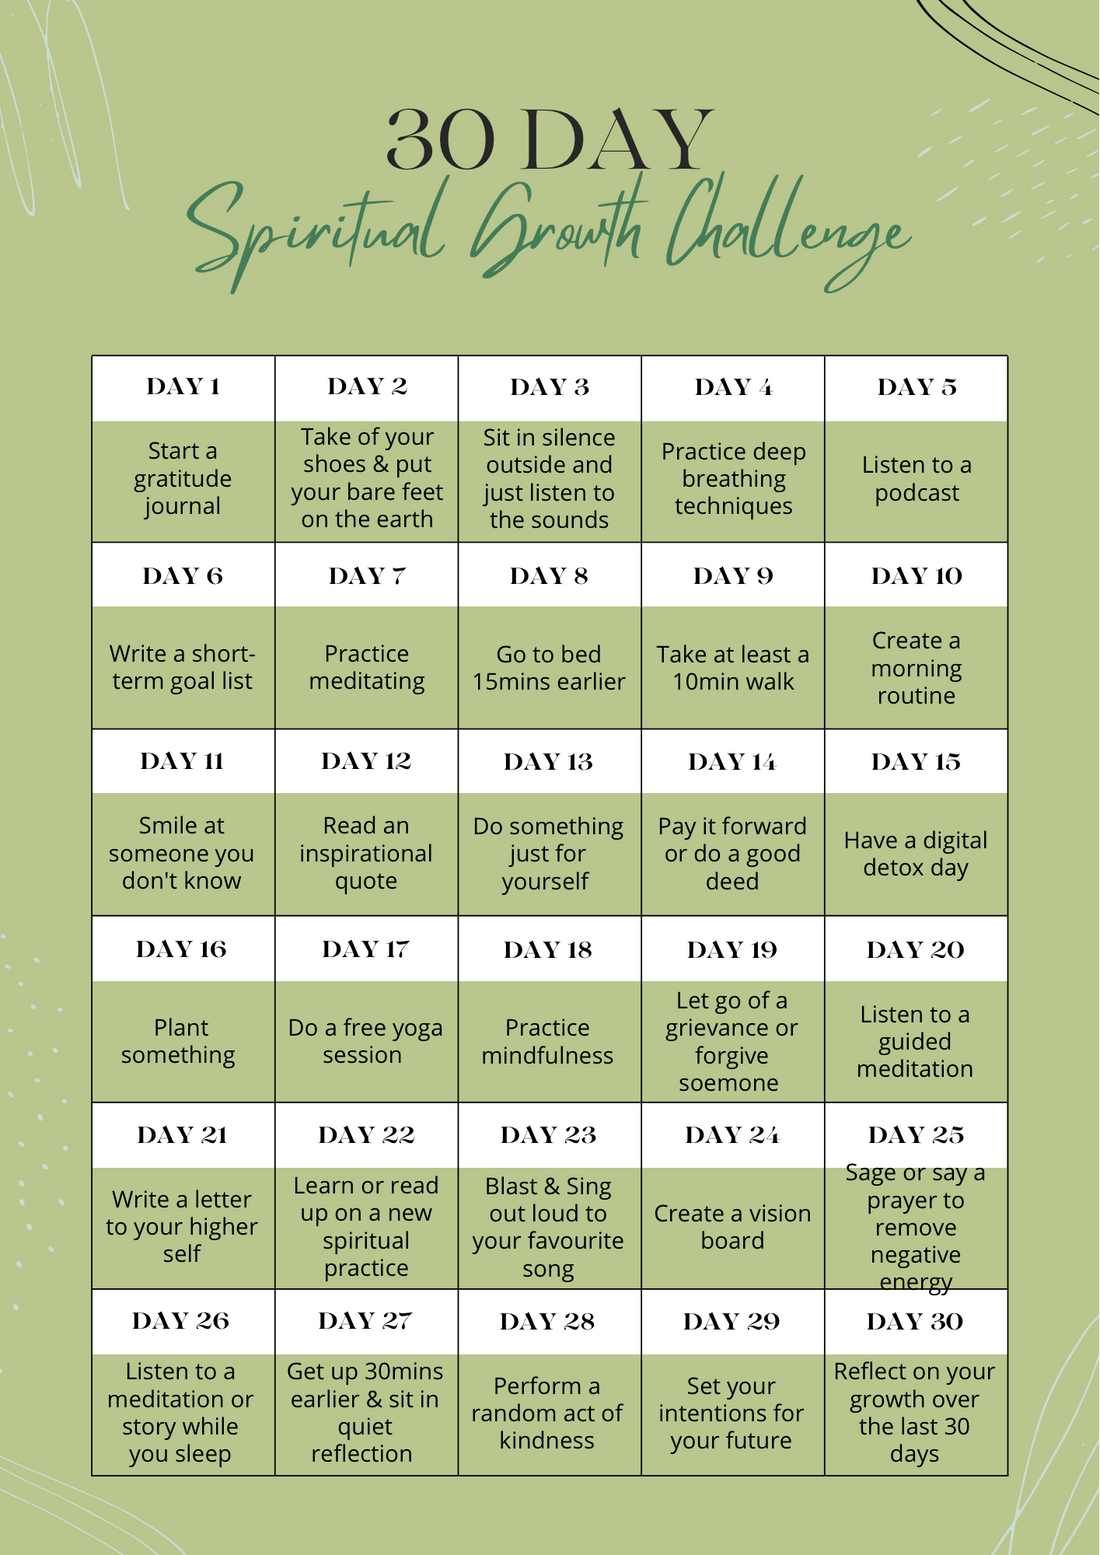 FREE 30 Day Spiritual Growth Challenge